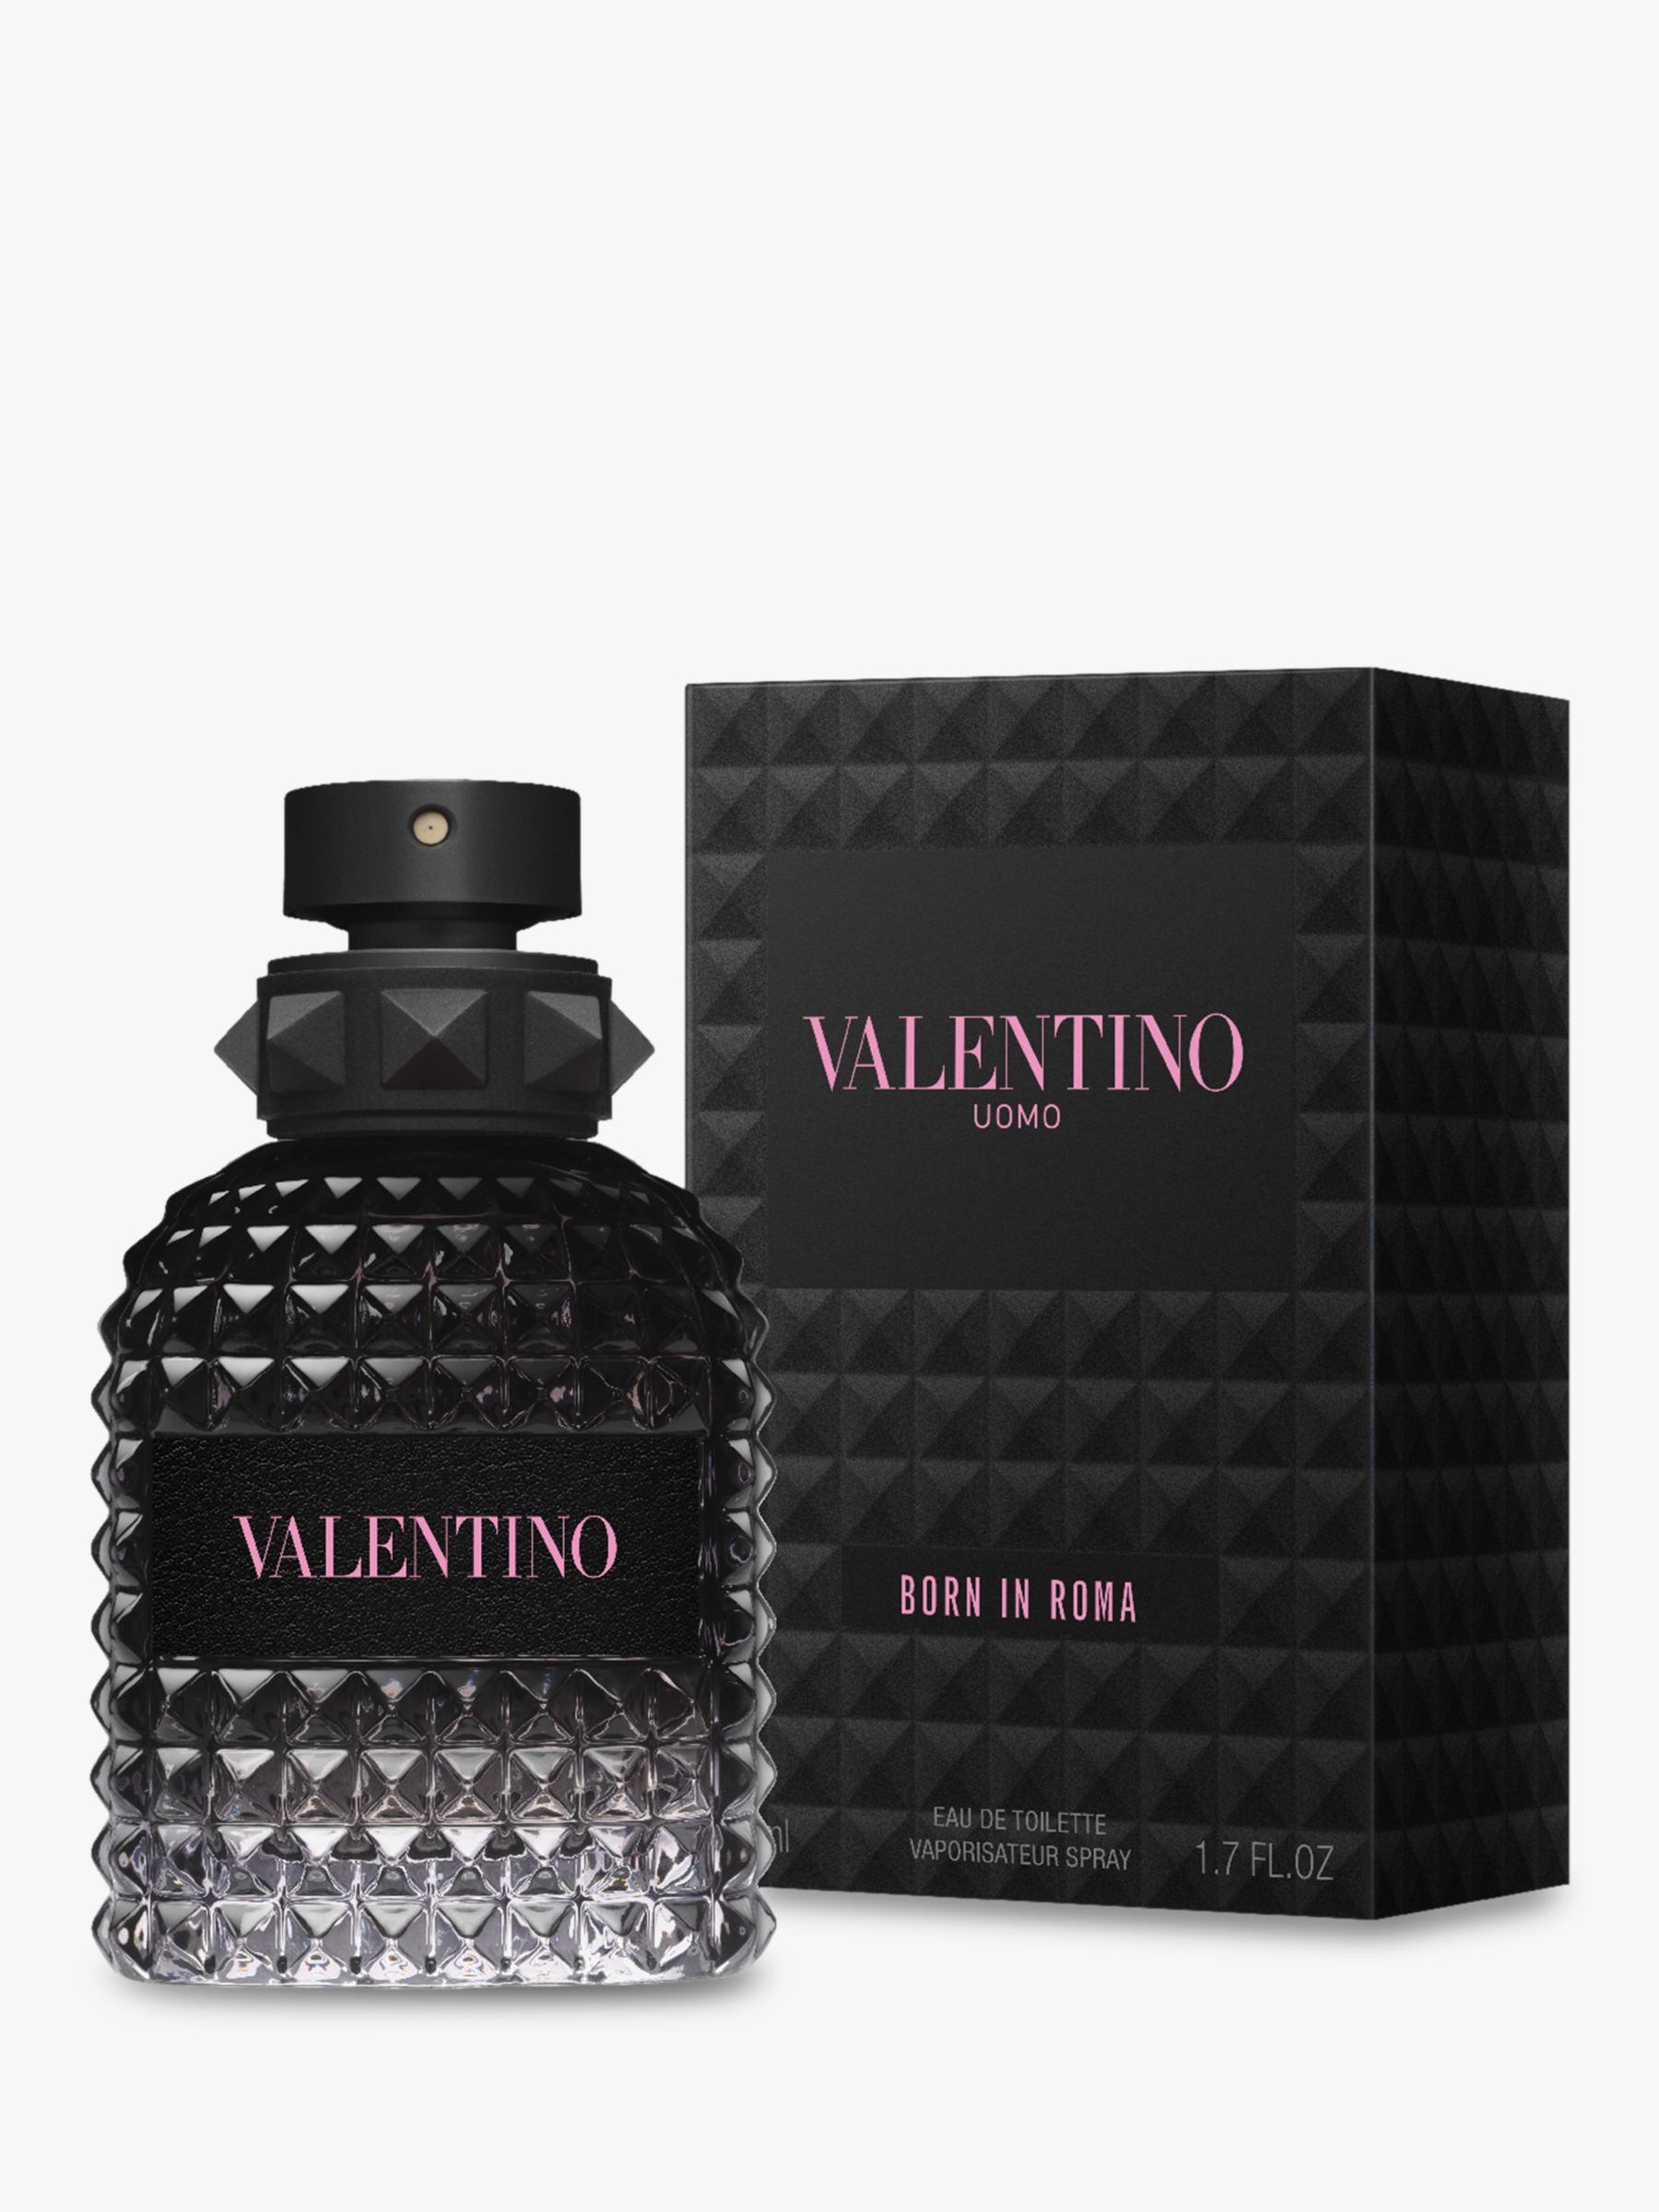 Valentino Born in Roma Uomo Eau de Toilette at John Lewis & Partners